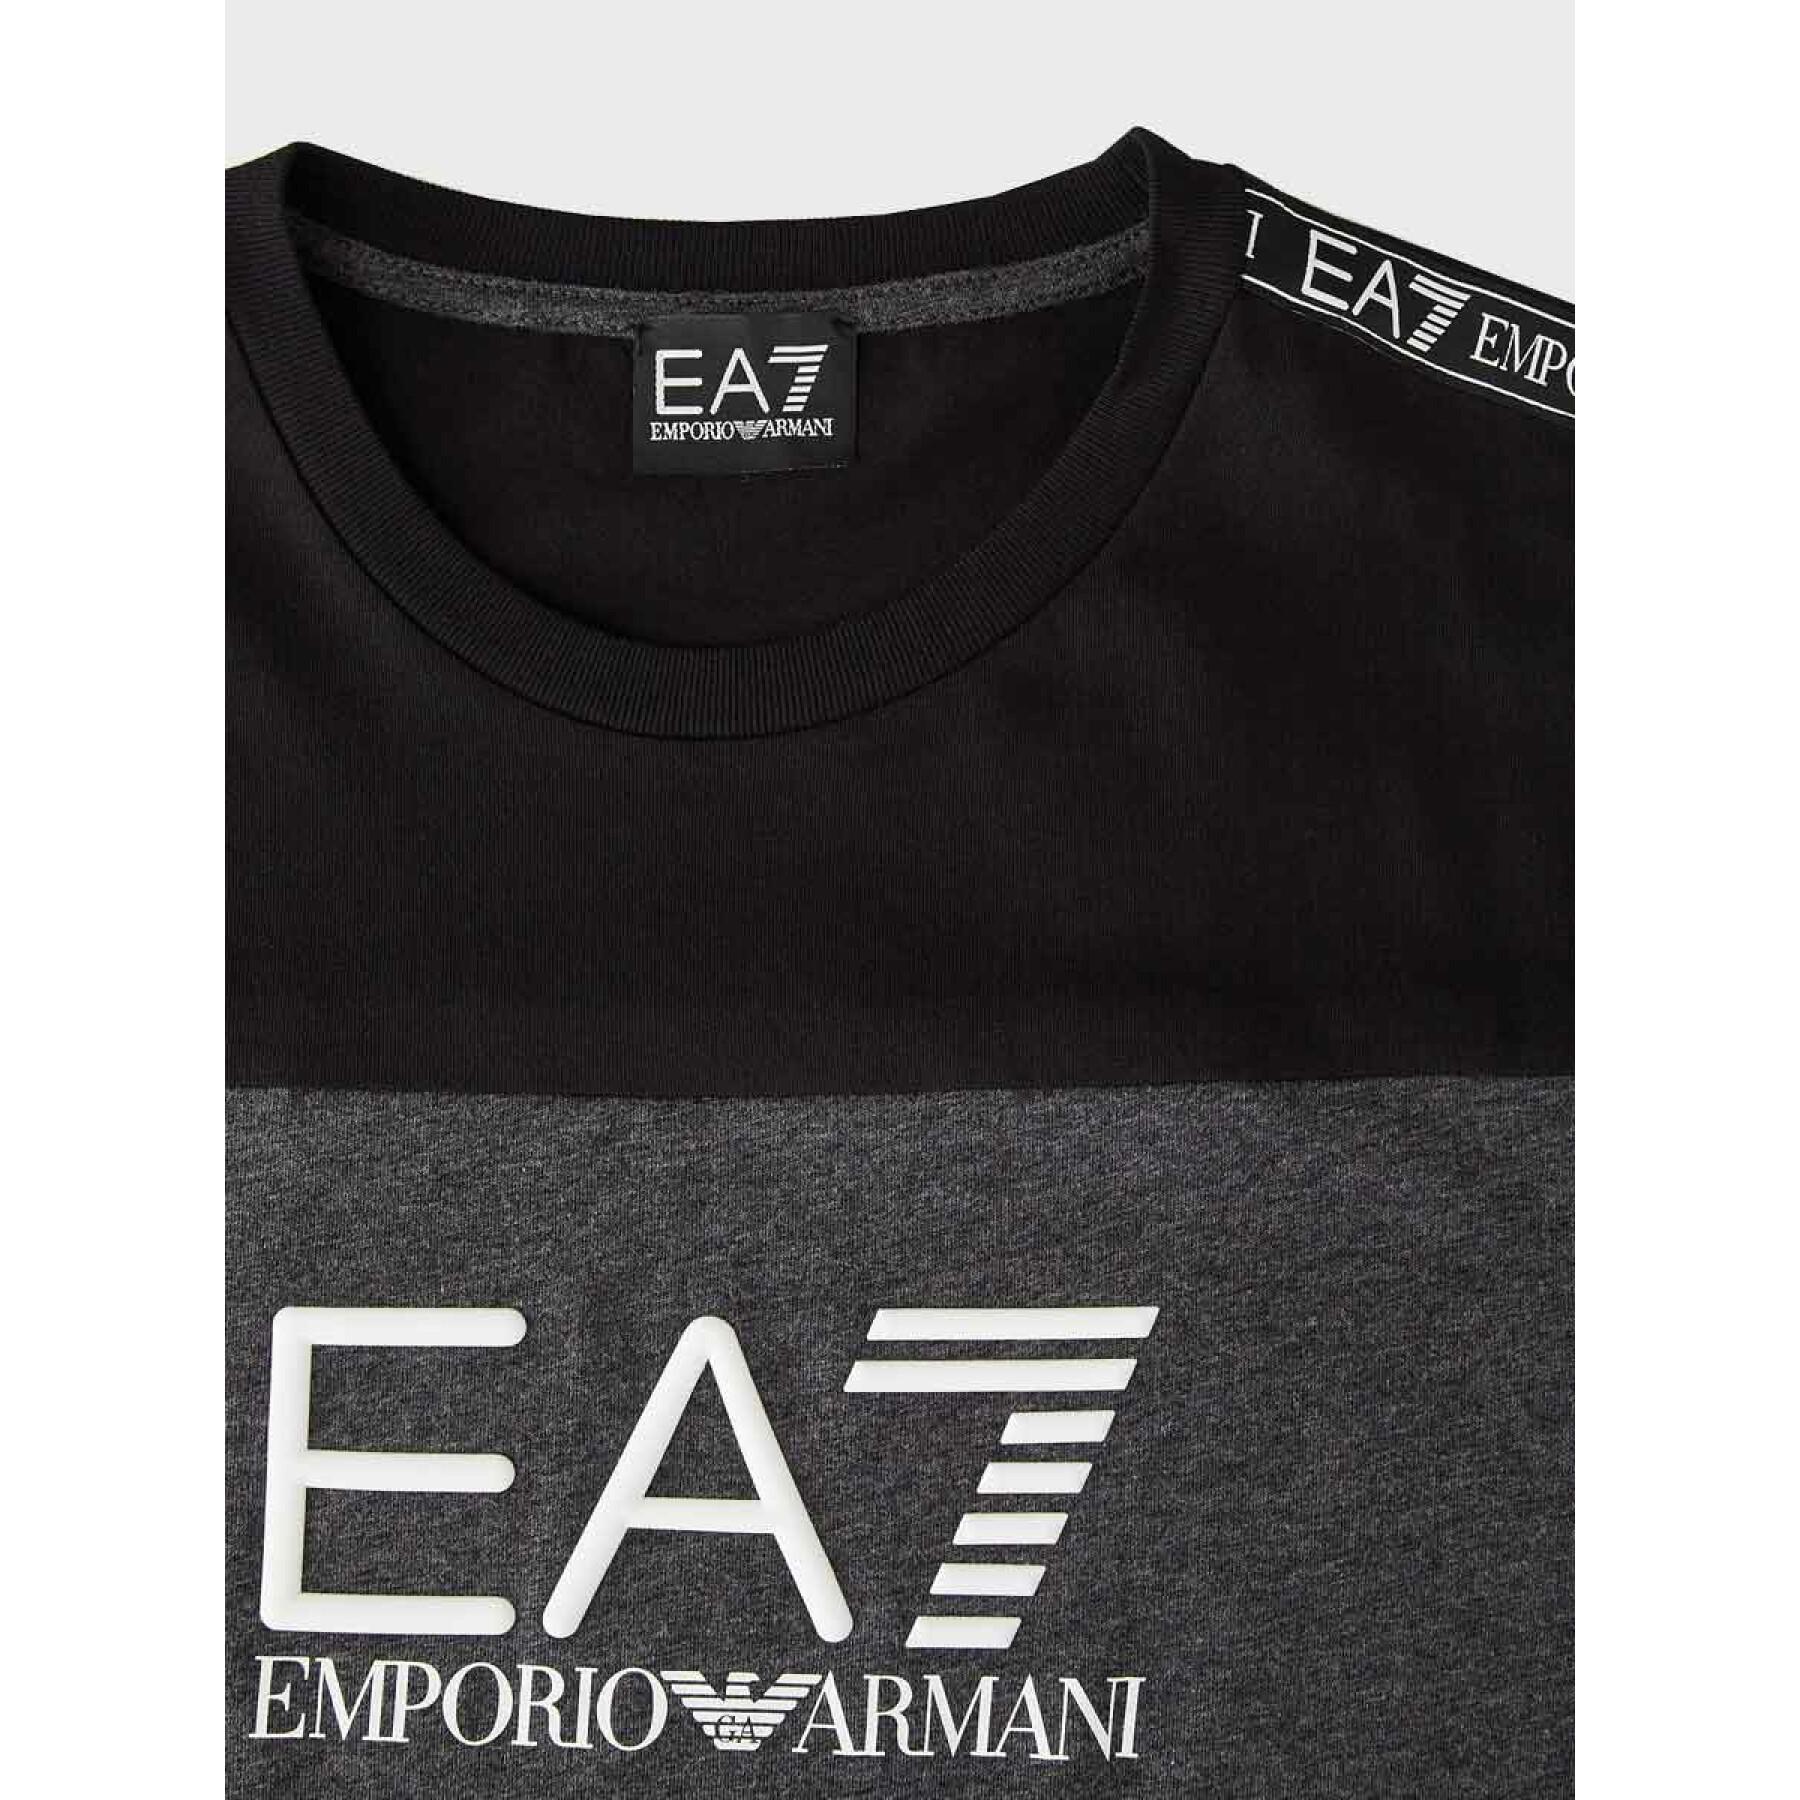 T-shirt EA7 Emporio Armani 6KPT10-PJ7CZ carbon